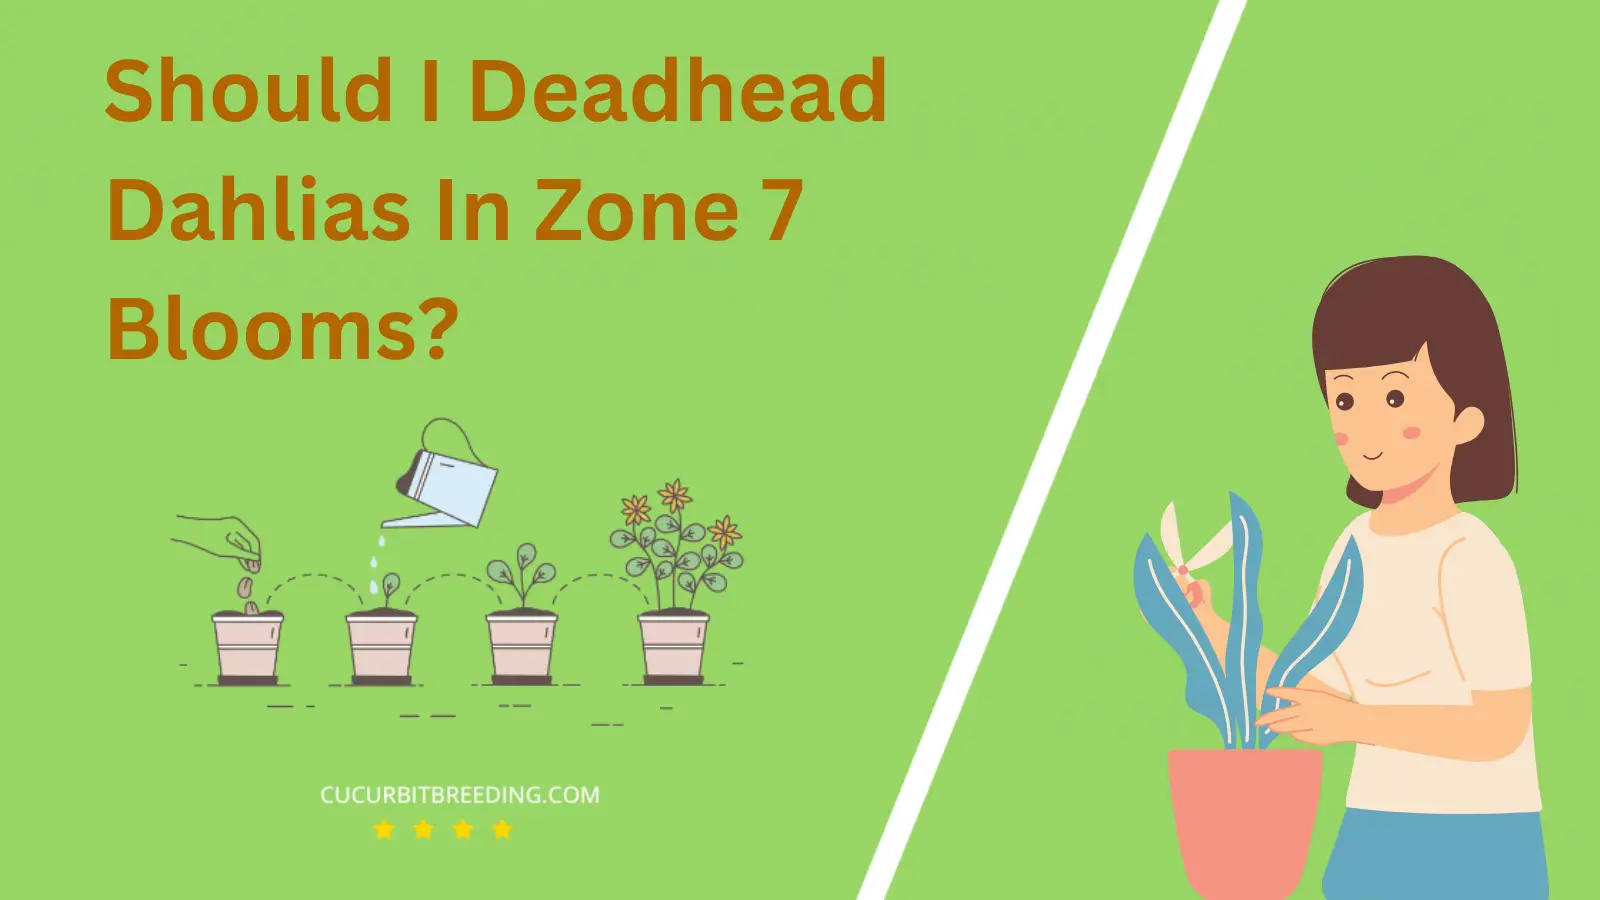 Should I Deadhead Dahlias In Zone 7 Blooms?